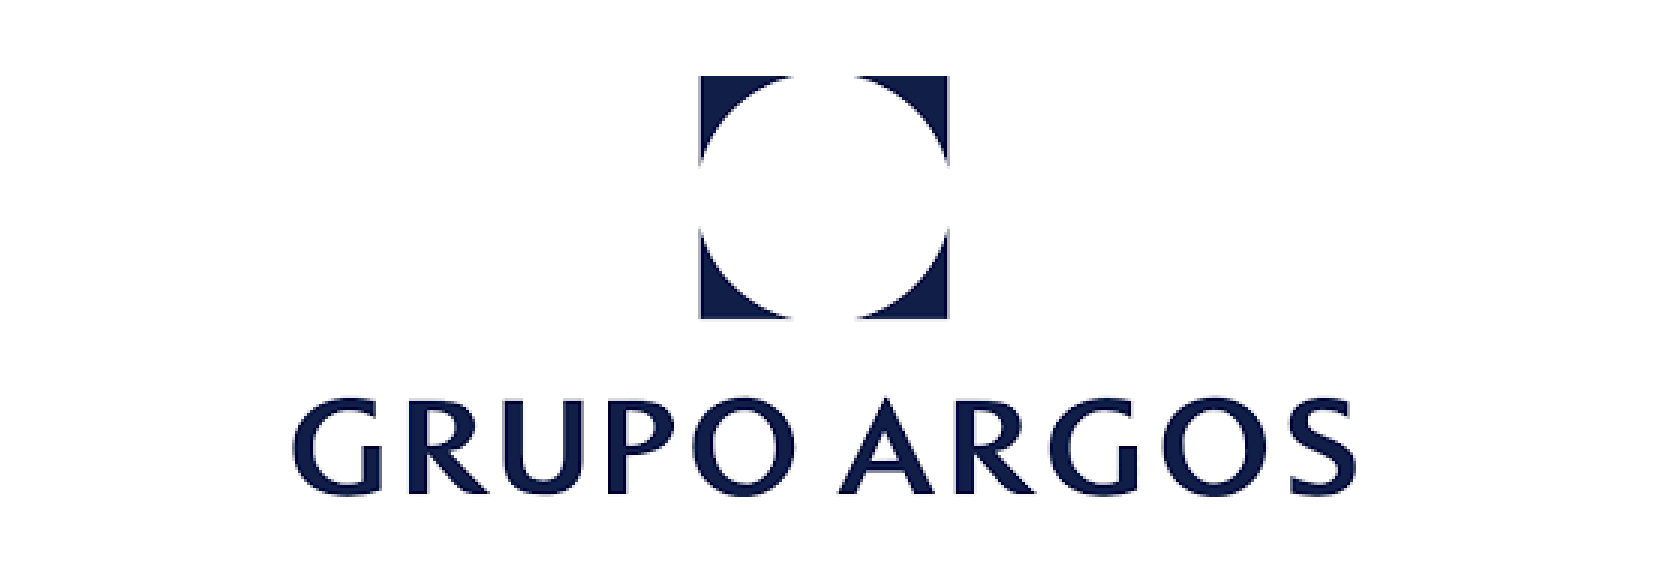 Grupo Argos.png